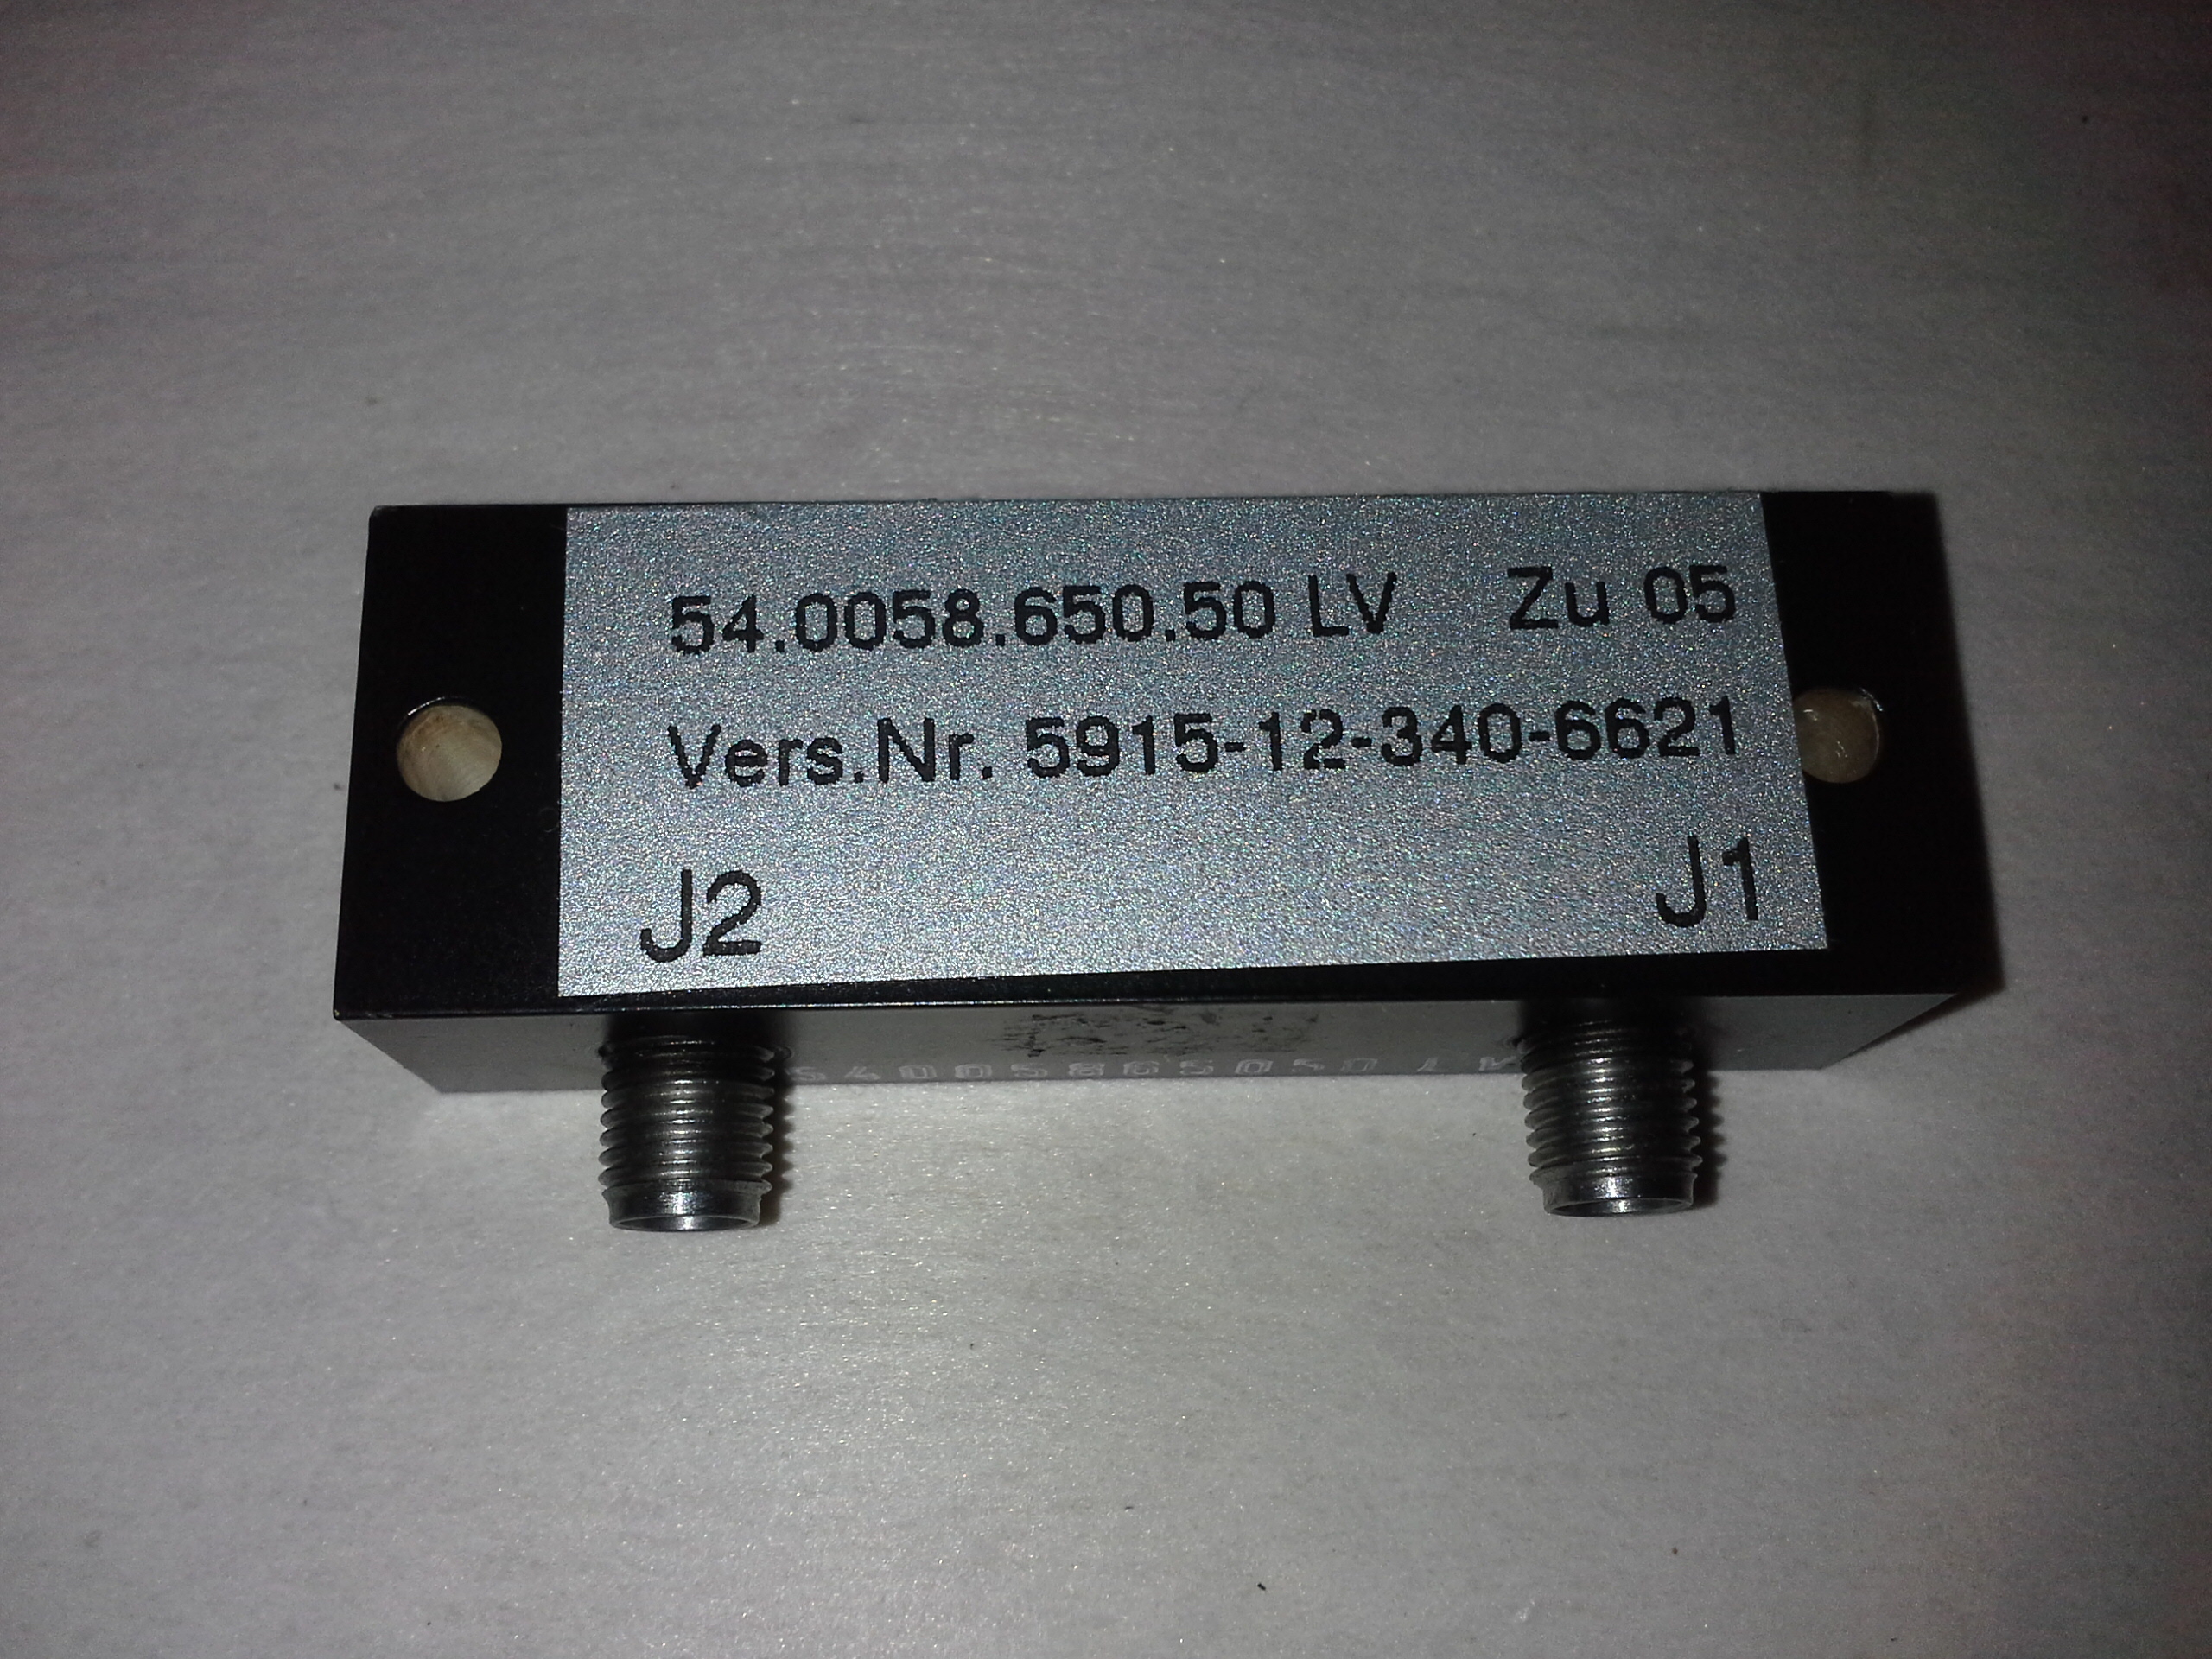 Filtronic SB132-Bandpassfilter 54.0058.650.50LV